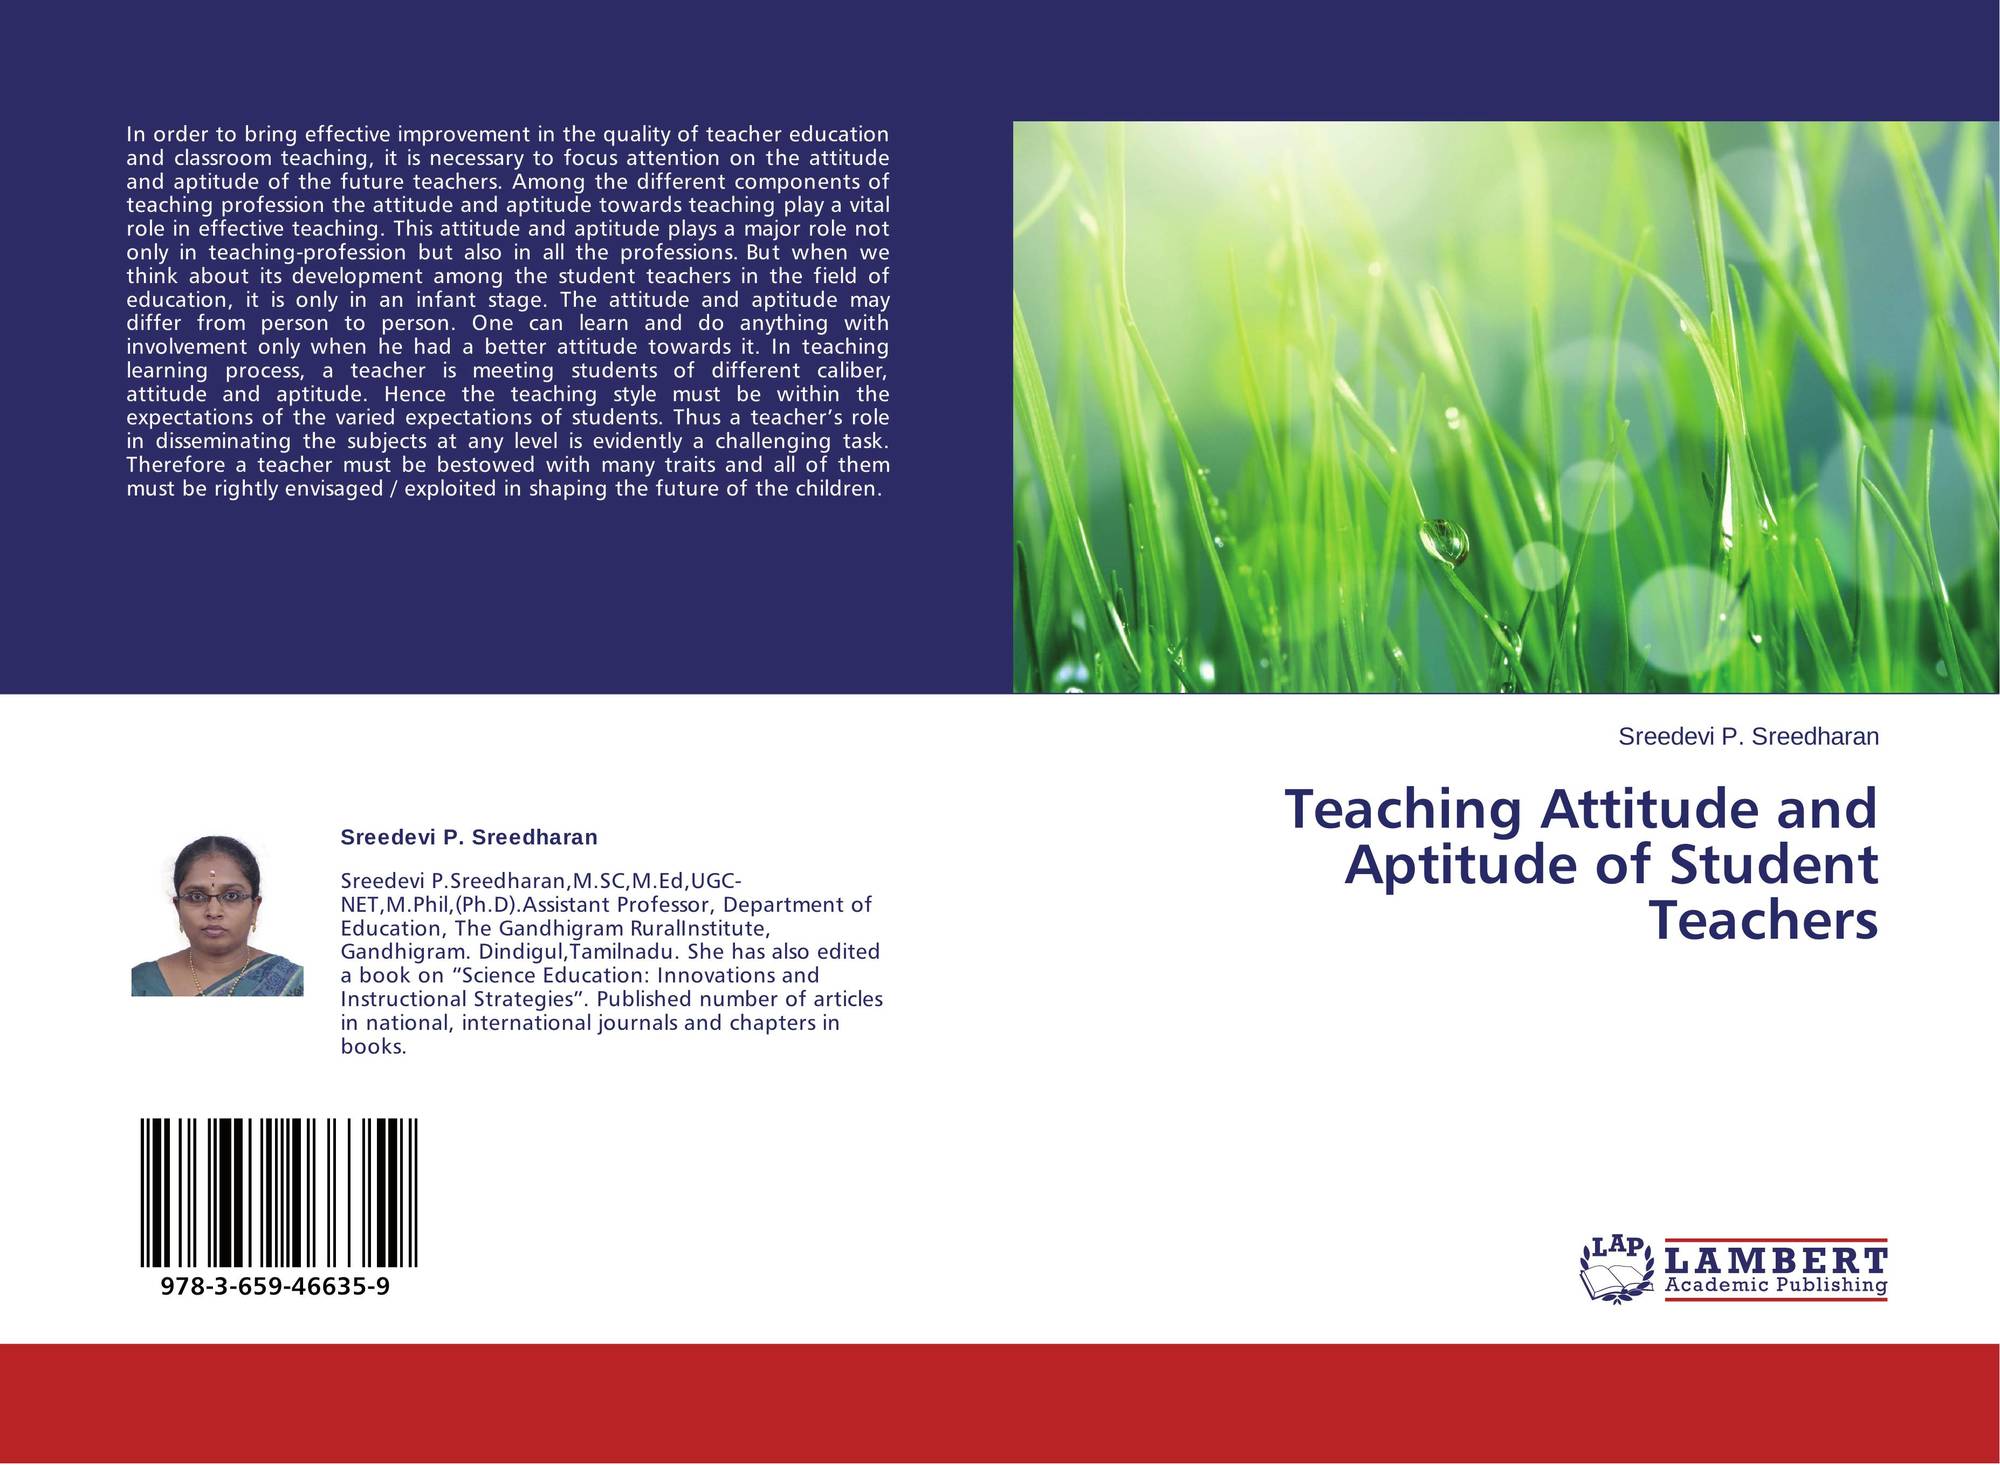 Teaching Attitude And Aptitude Of Student Teachers 978 3 659 46635 9 3659466352 9783659466359